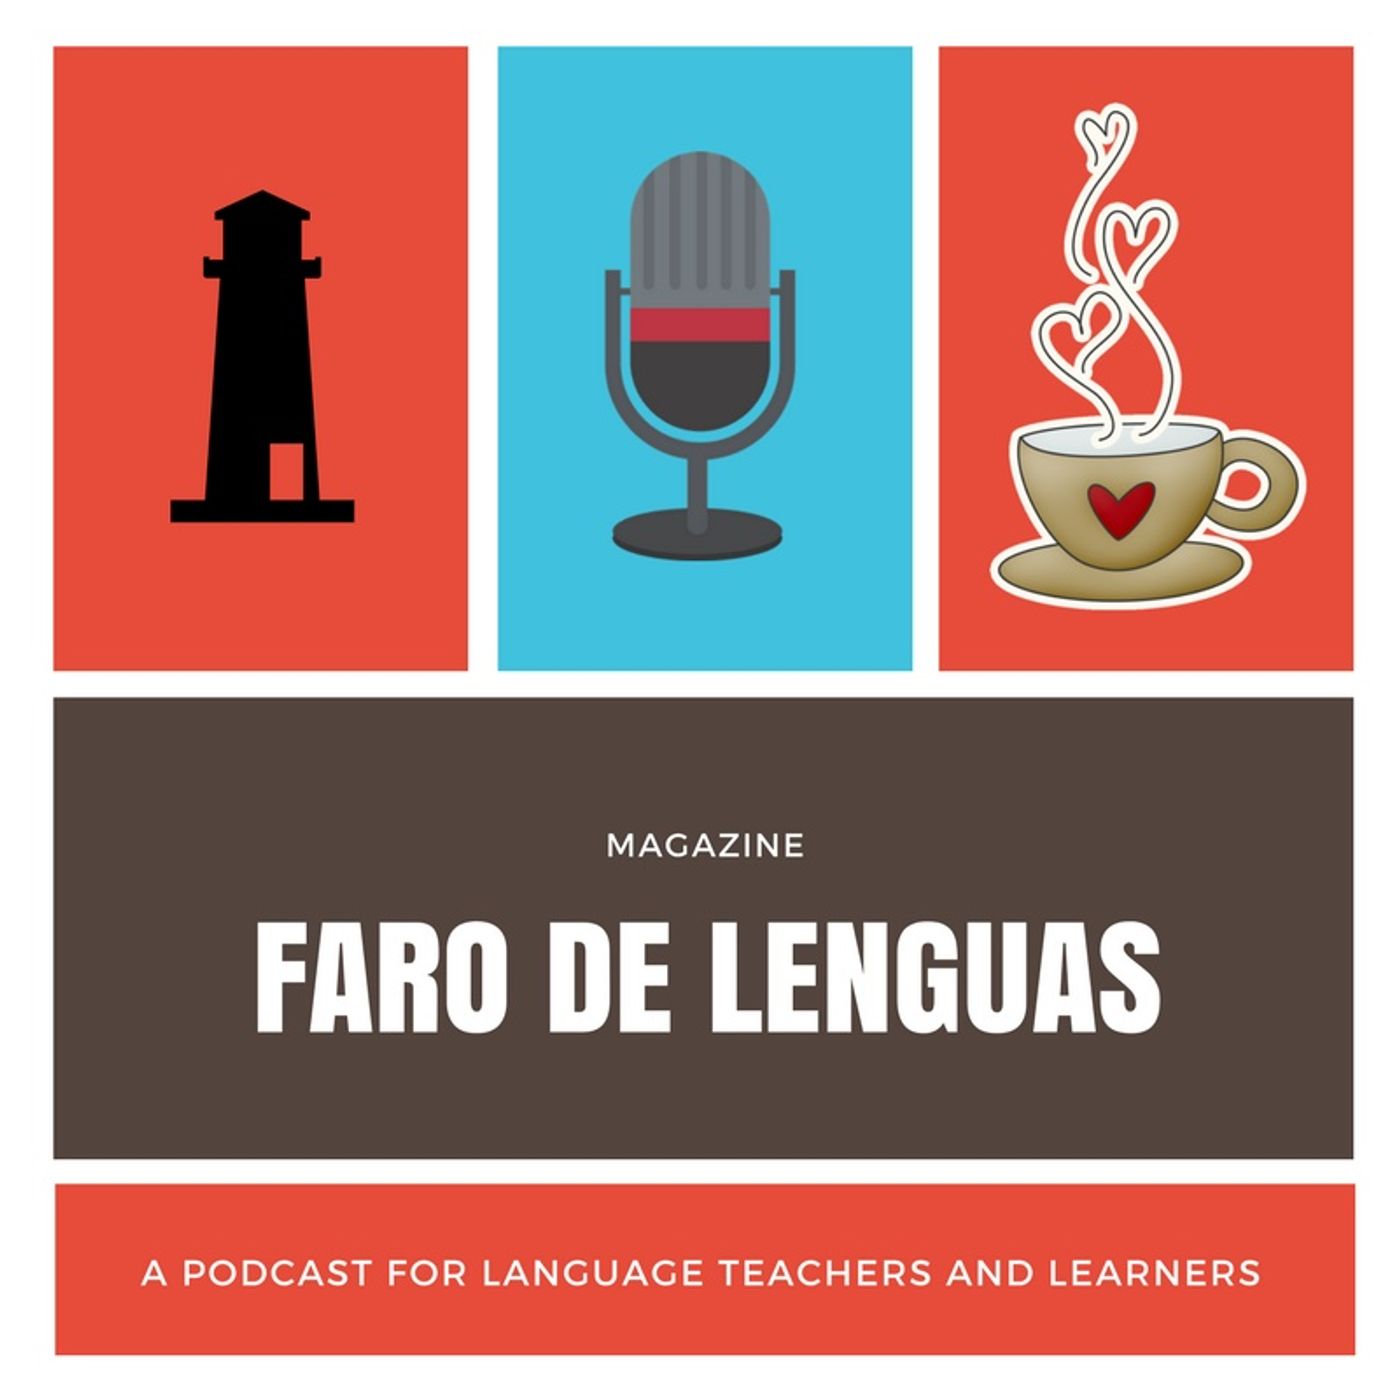 Promotional introduction to Faro de Lenguas magazine.